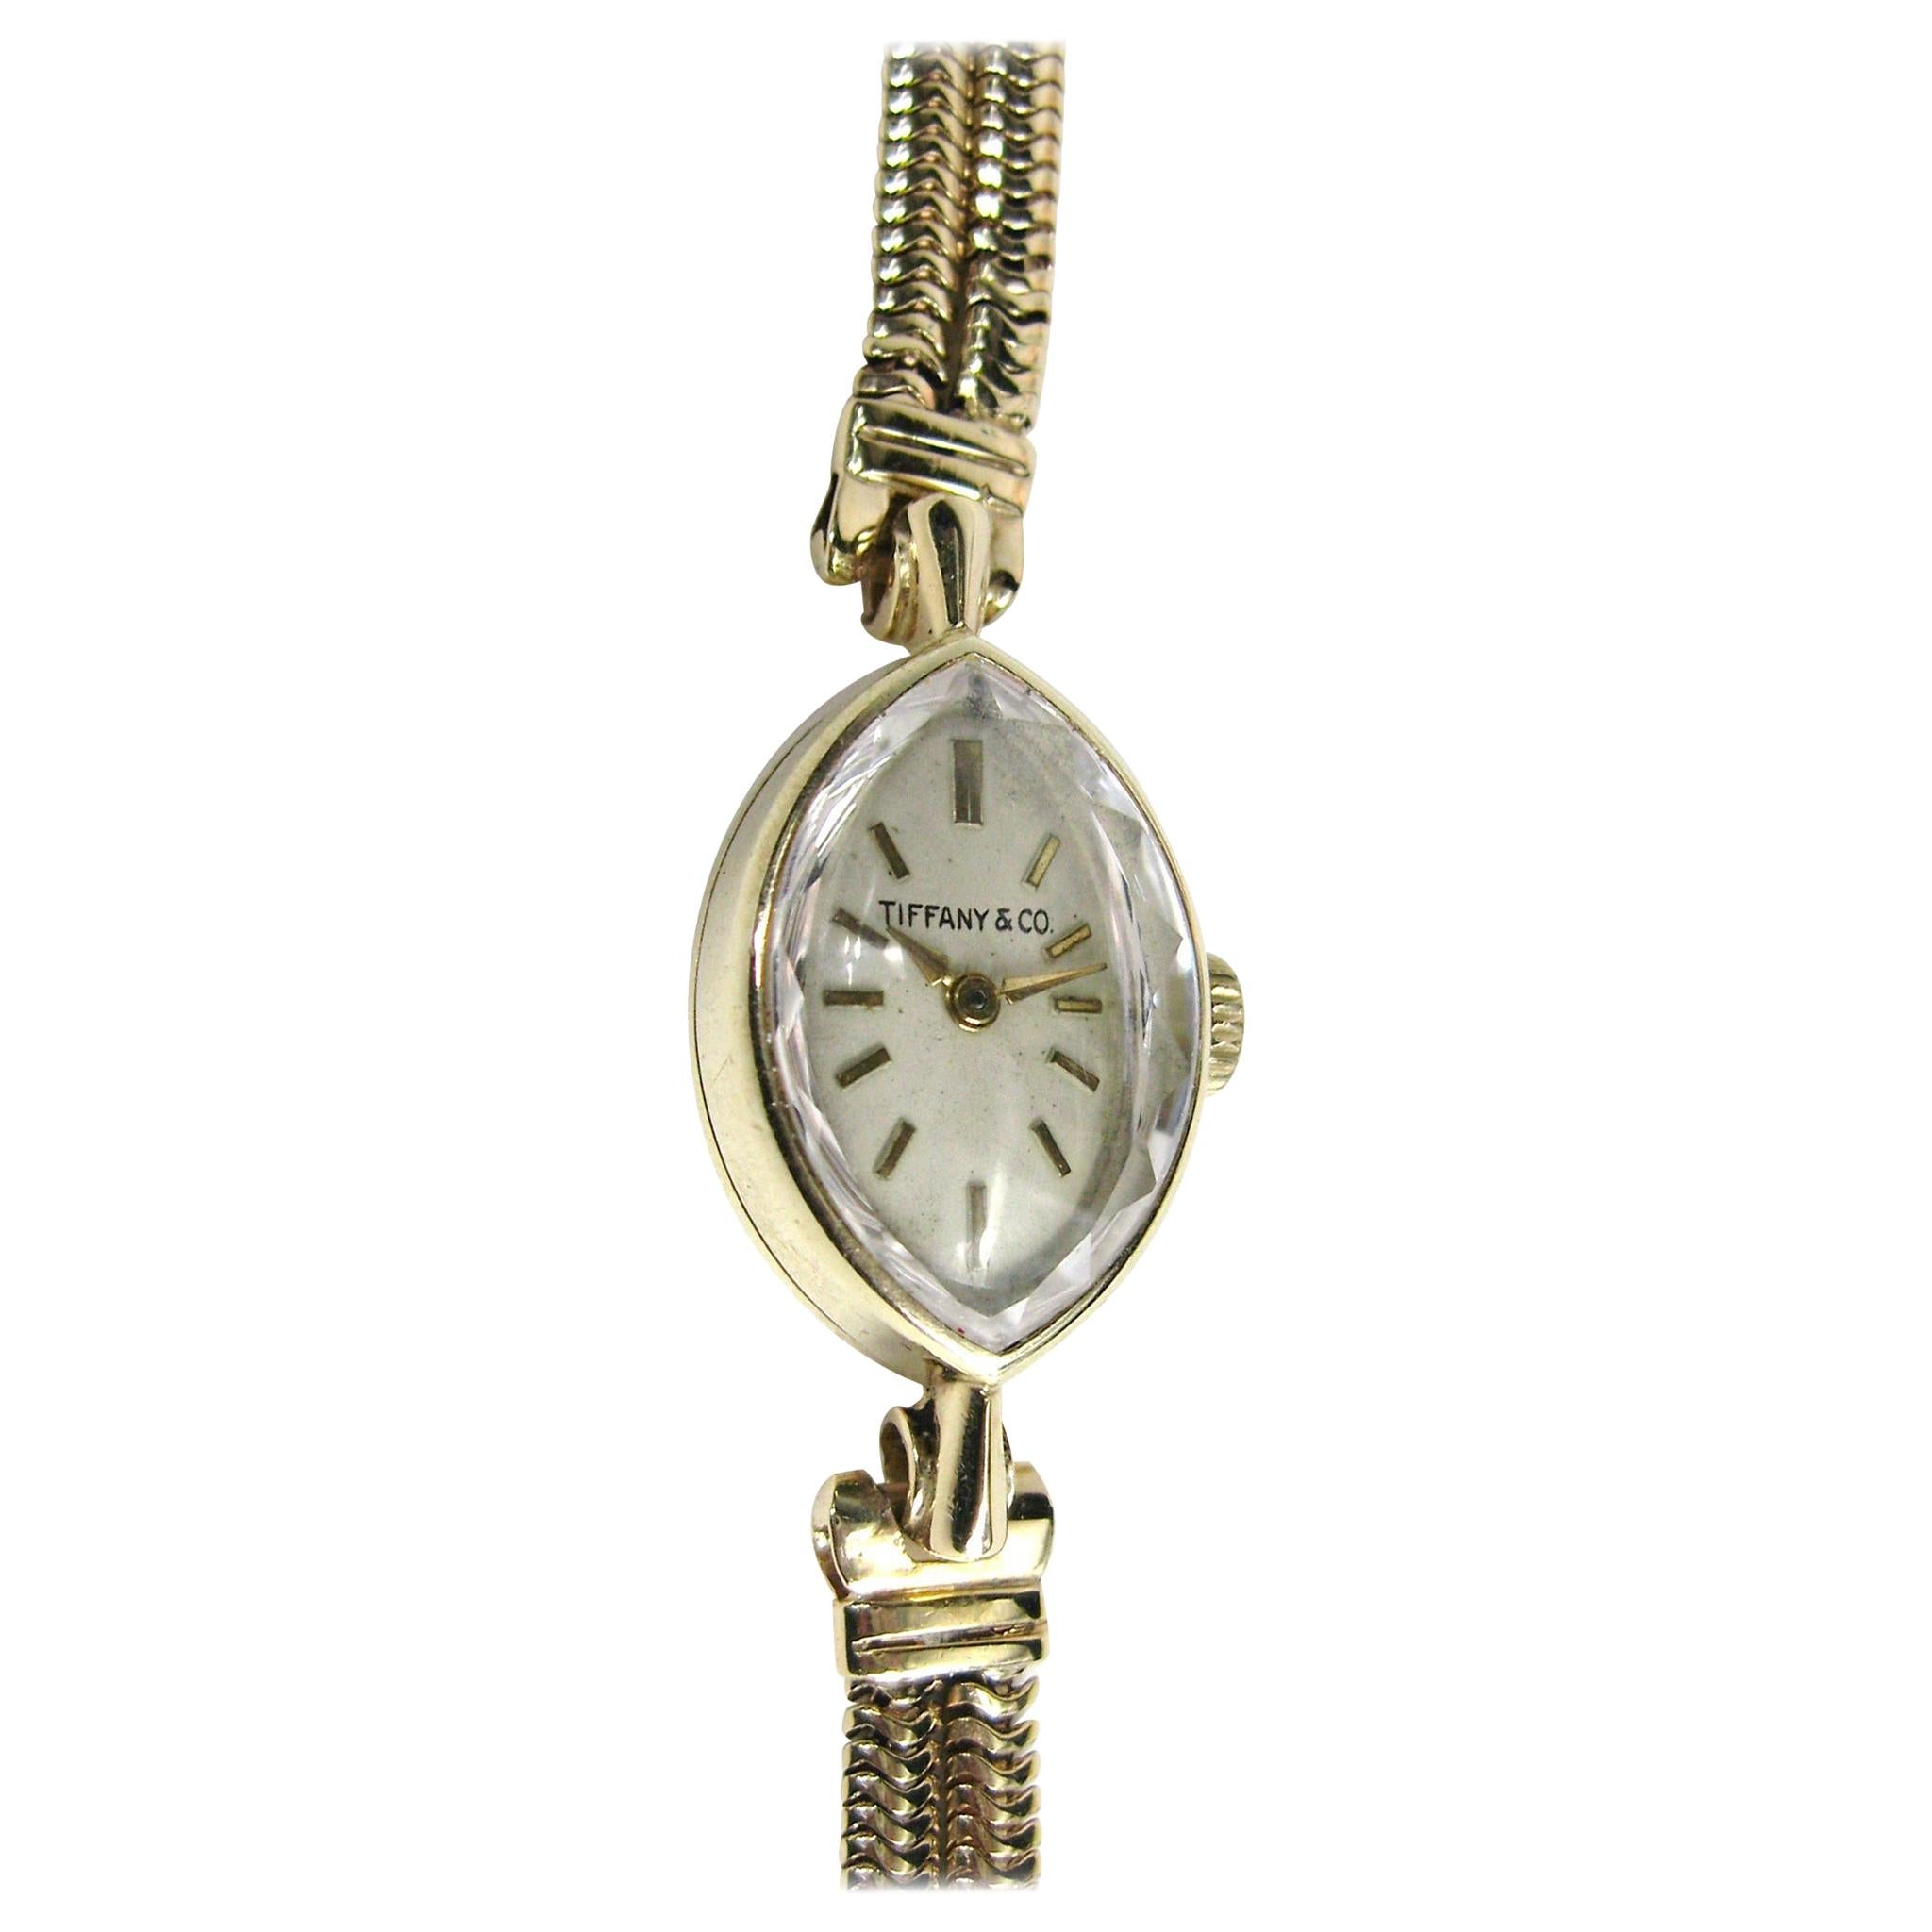 Tiffany & Co. Uhr Damen 14 Karat Gelbgold Oval Face Armbanduhr, 1940er Jahre